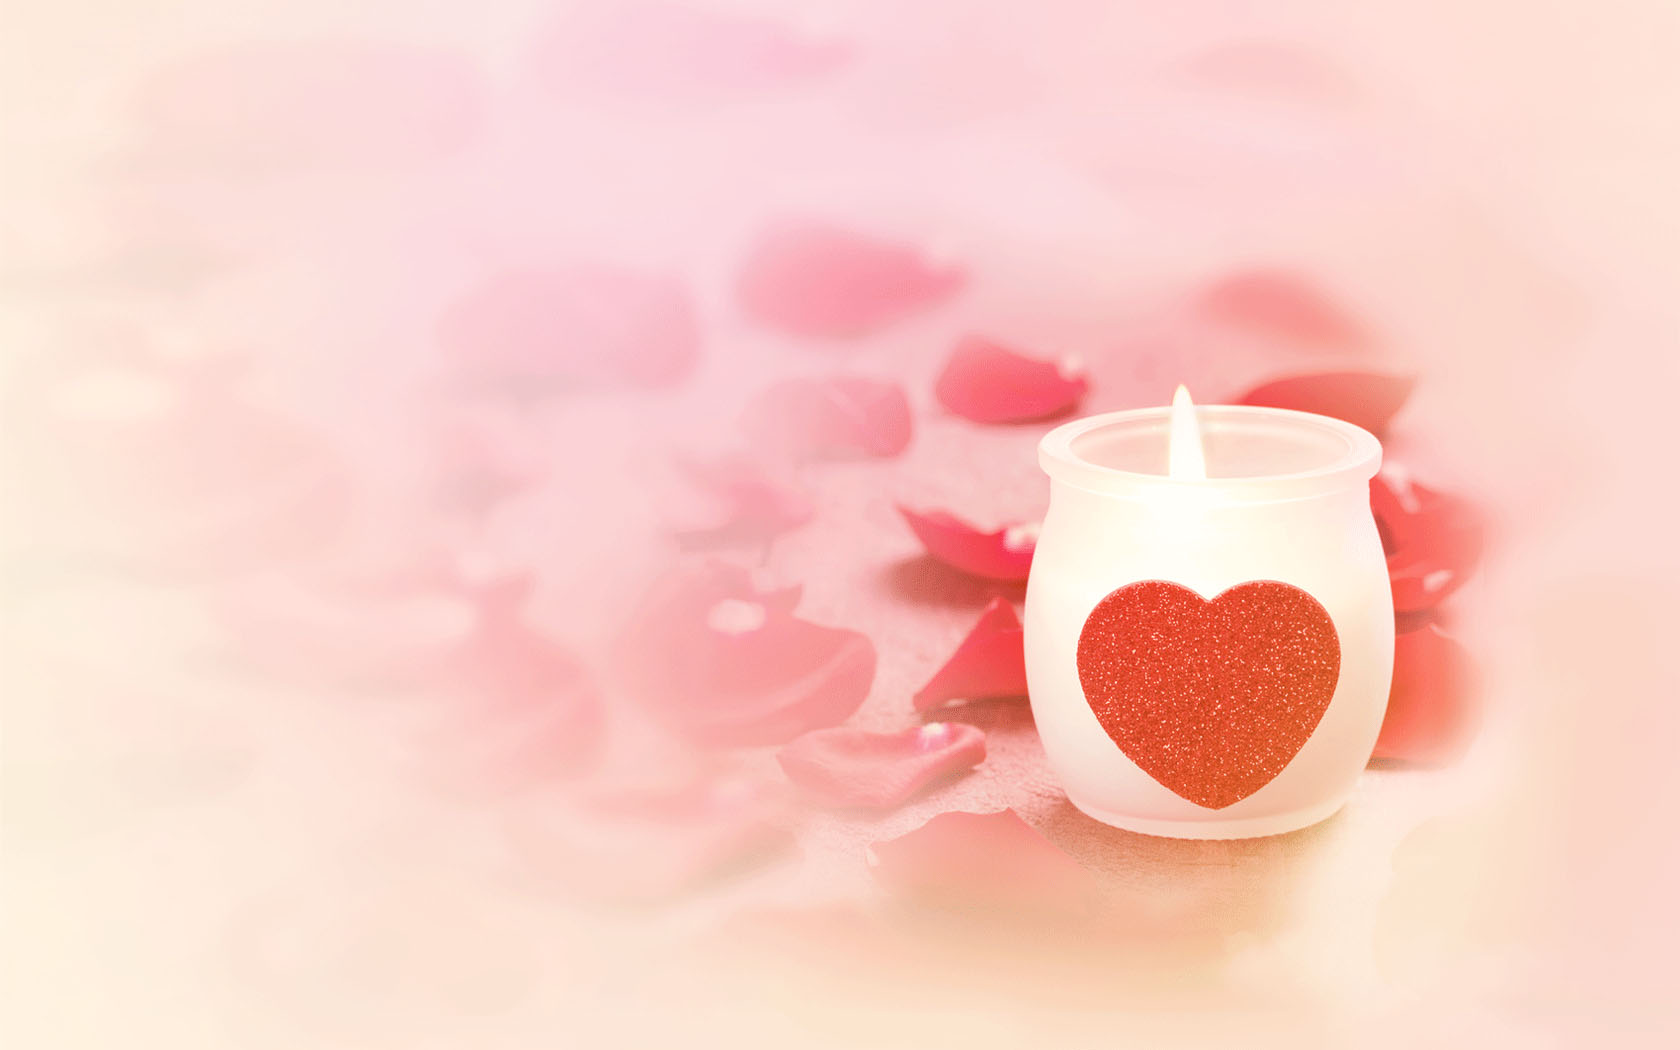 Candlelight Desktop Wallpaper of Love